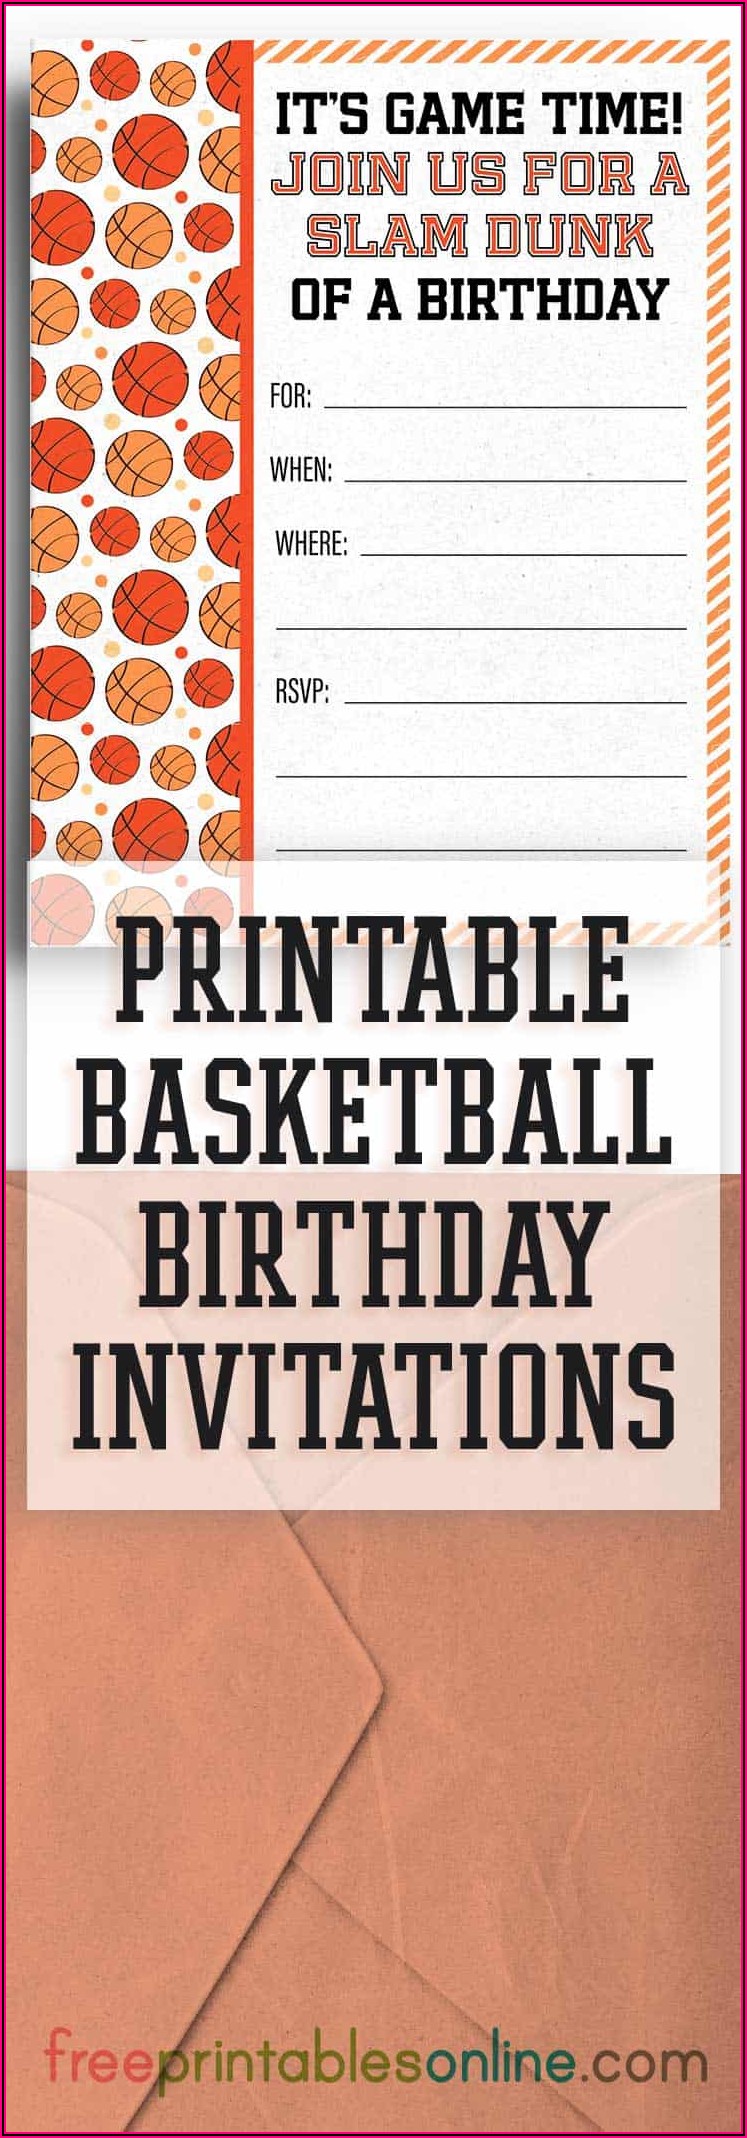 Free Printable Basketball Birthday Party Invitations